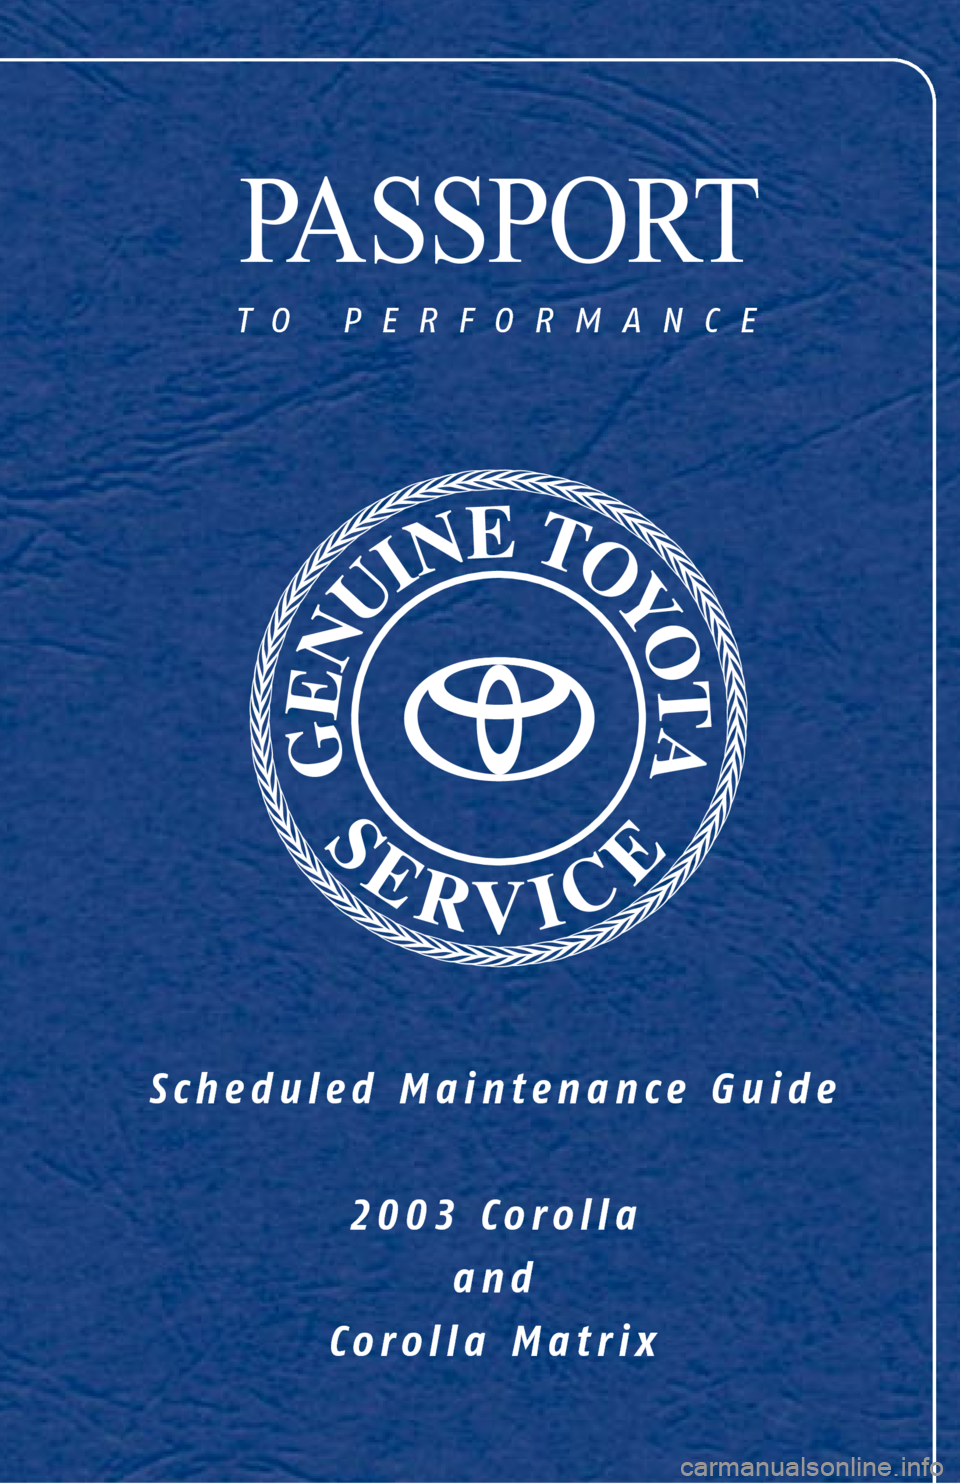 TOYOTA MATRIX 2003 E130 / 1.G Scheduled Maintenance Guide PASSPORT
to performance
Scheduled Maintenance Guide
2003 Corolla
and
Corolla Matrix 